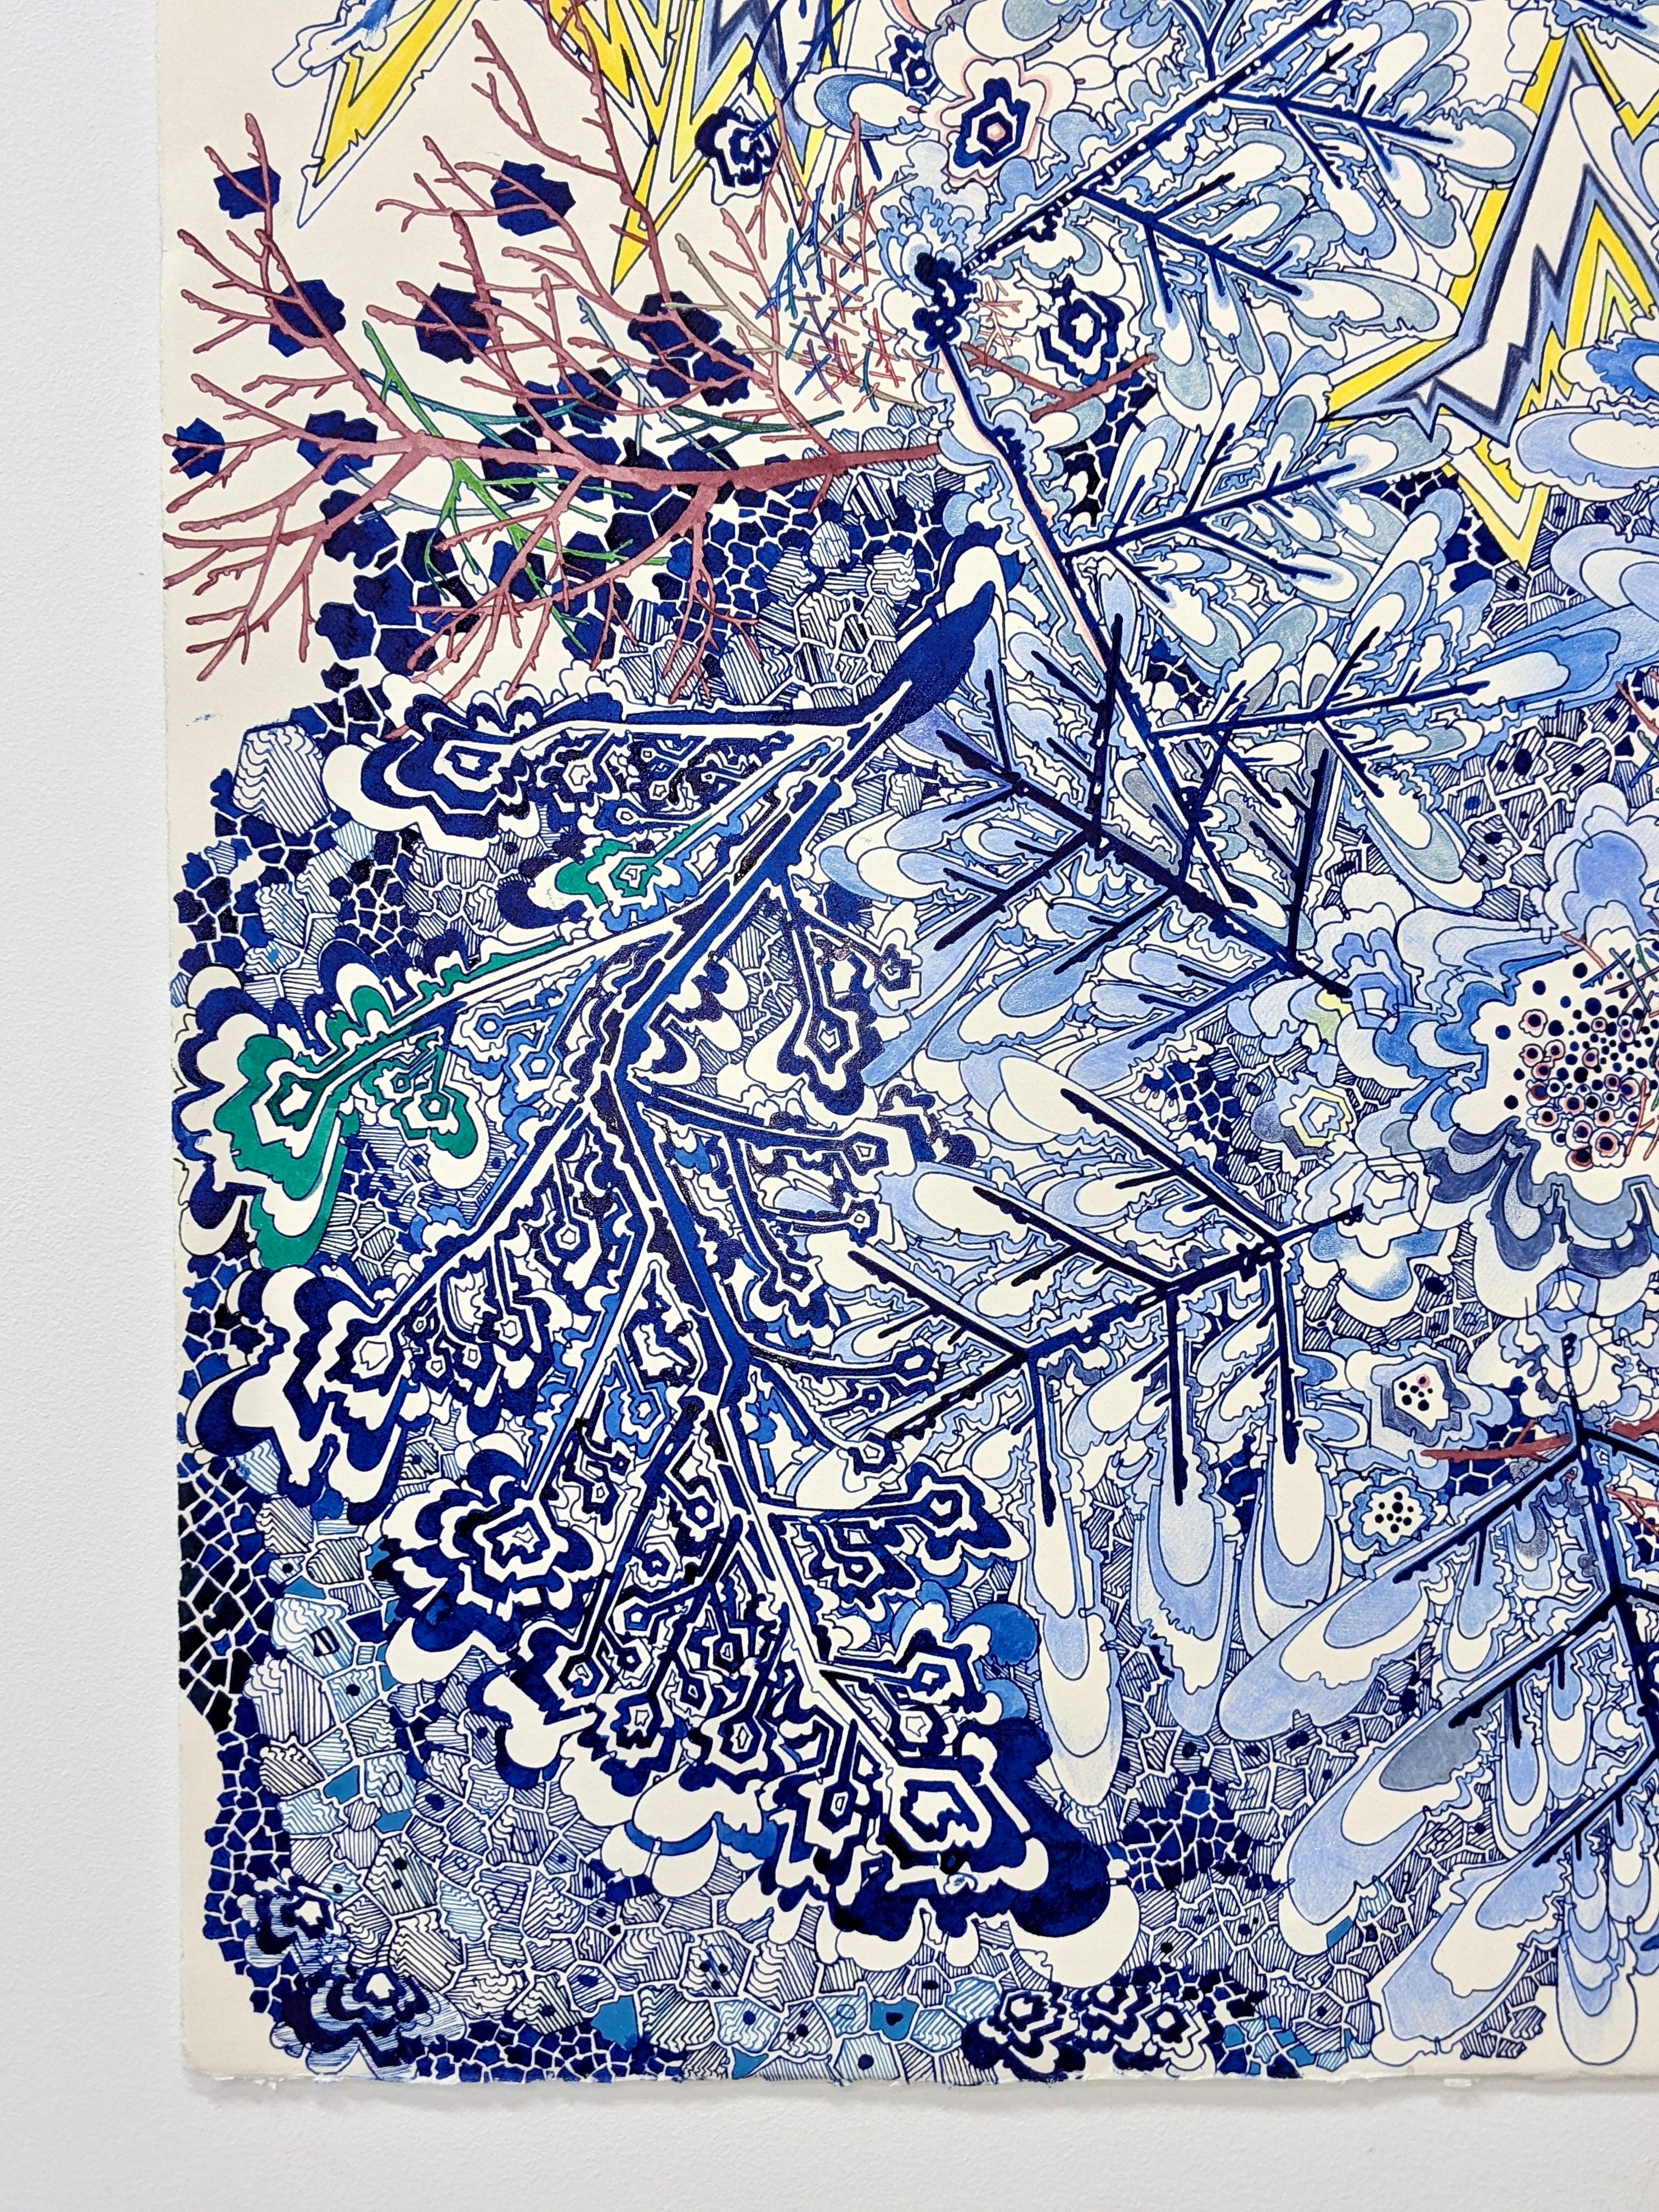 Thunderbolts, Cobalt Blue, Burgundy Mauve, Yellow Lightning, Snowflake, Branches - Contemporary Art by Sarah Morejohn